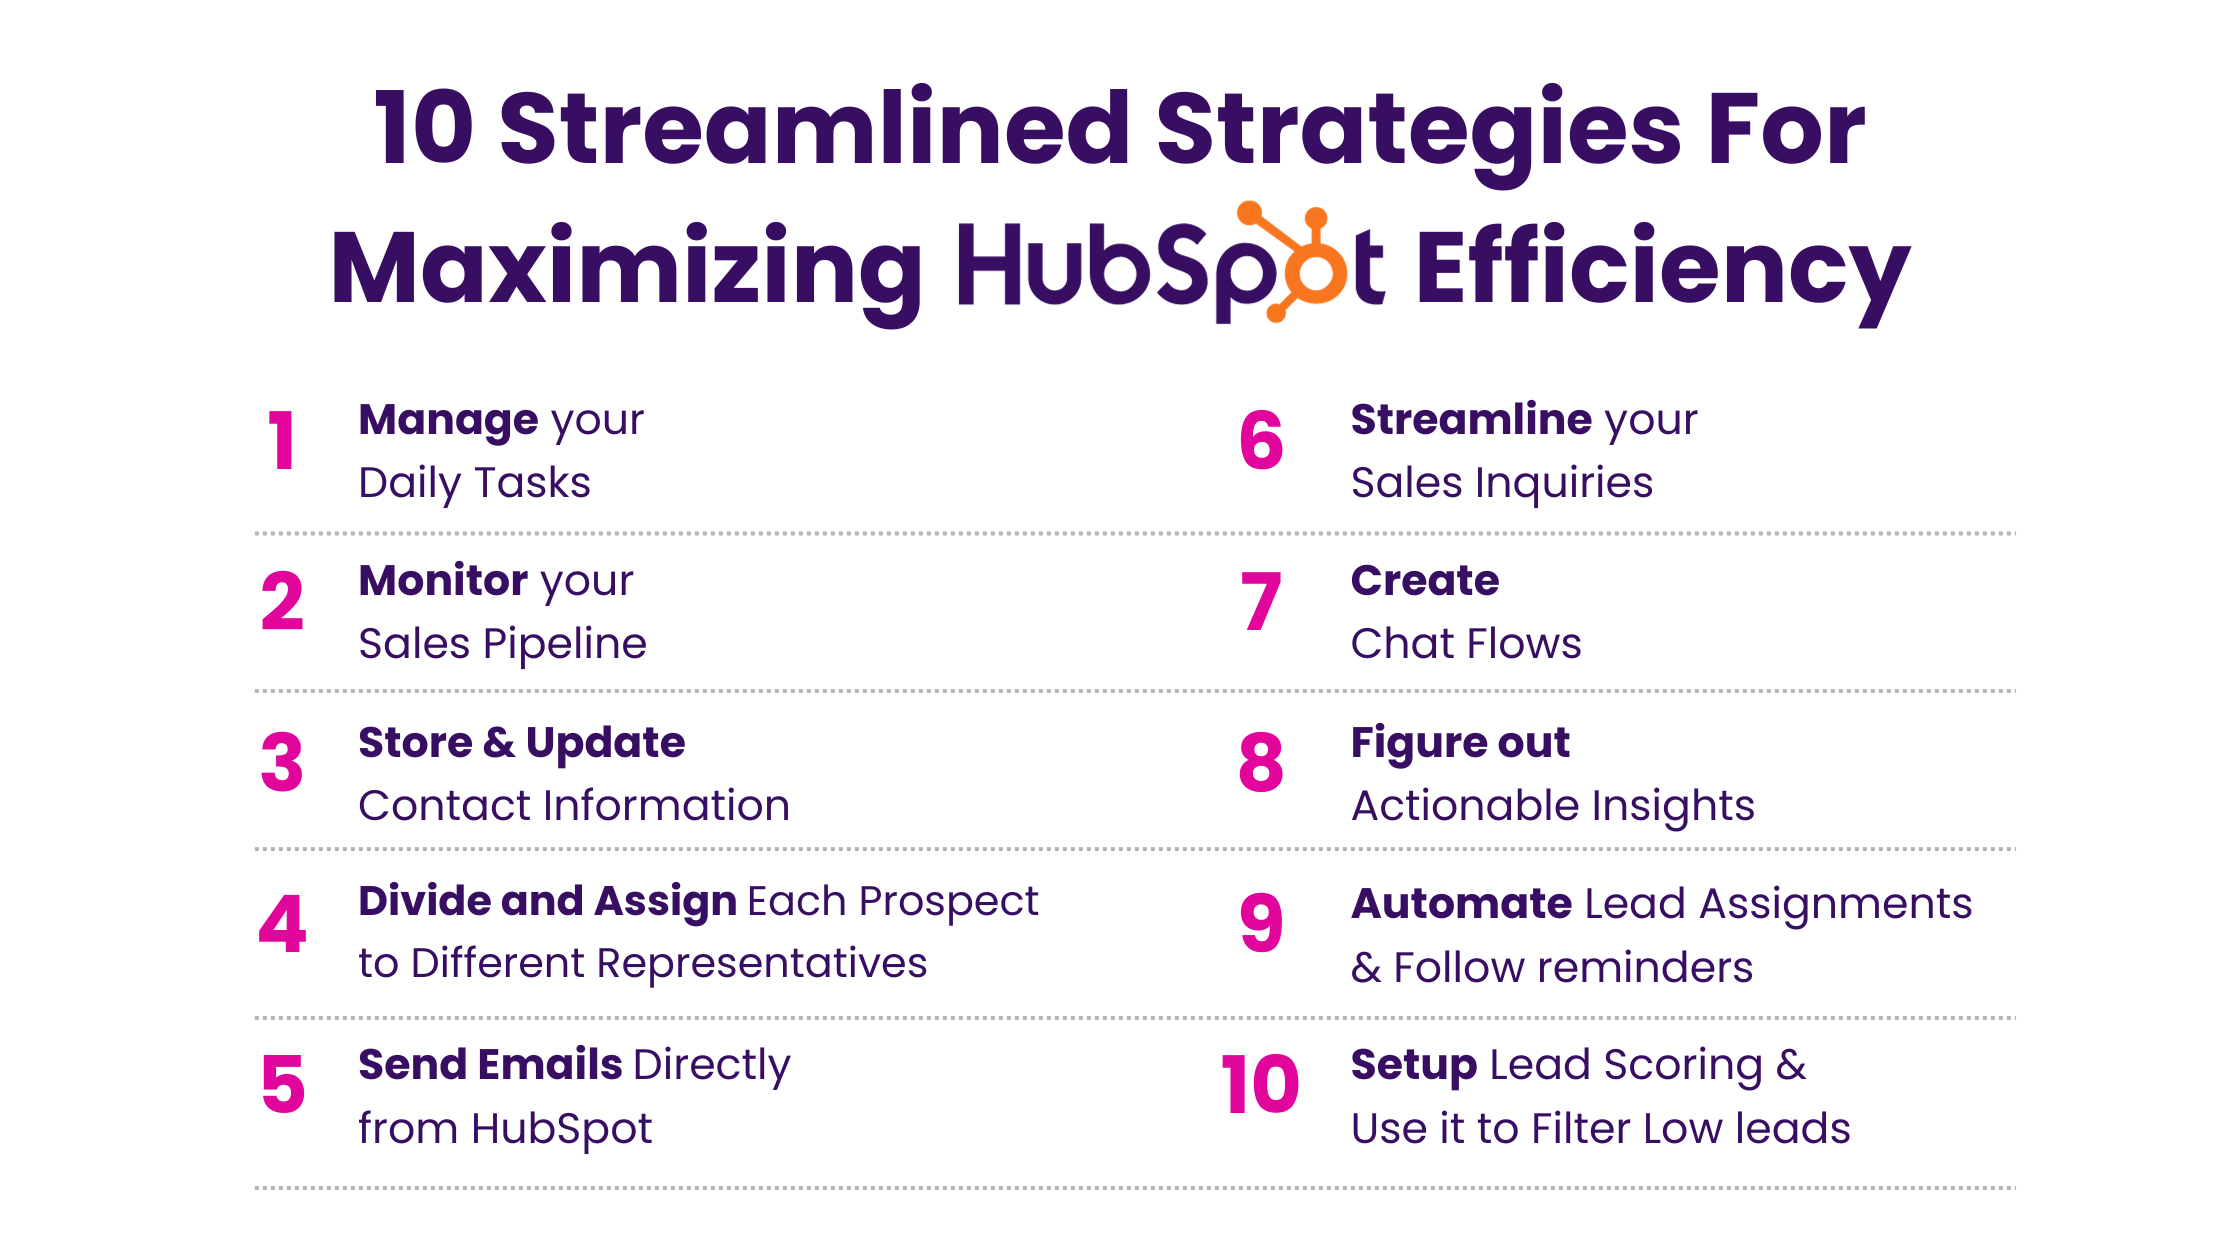 10 Streamlined Strategies For Maximizing Hubspot Efficiency